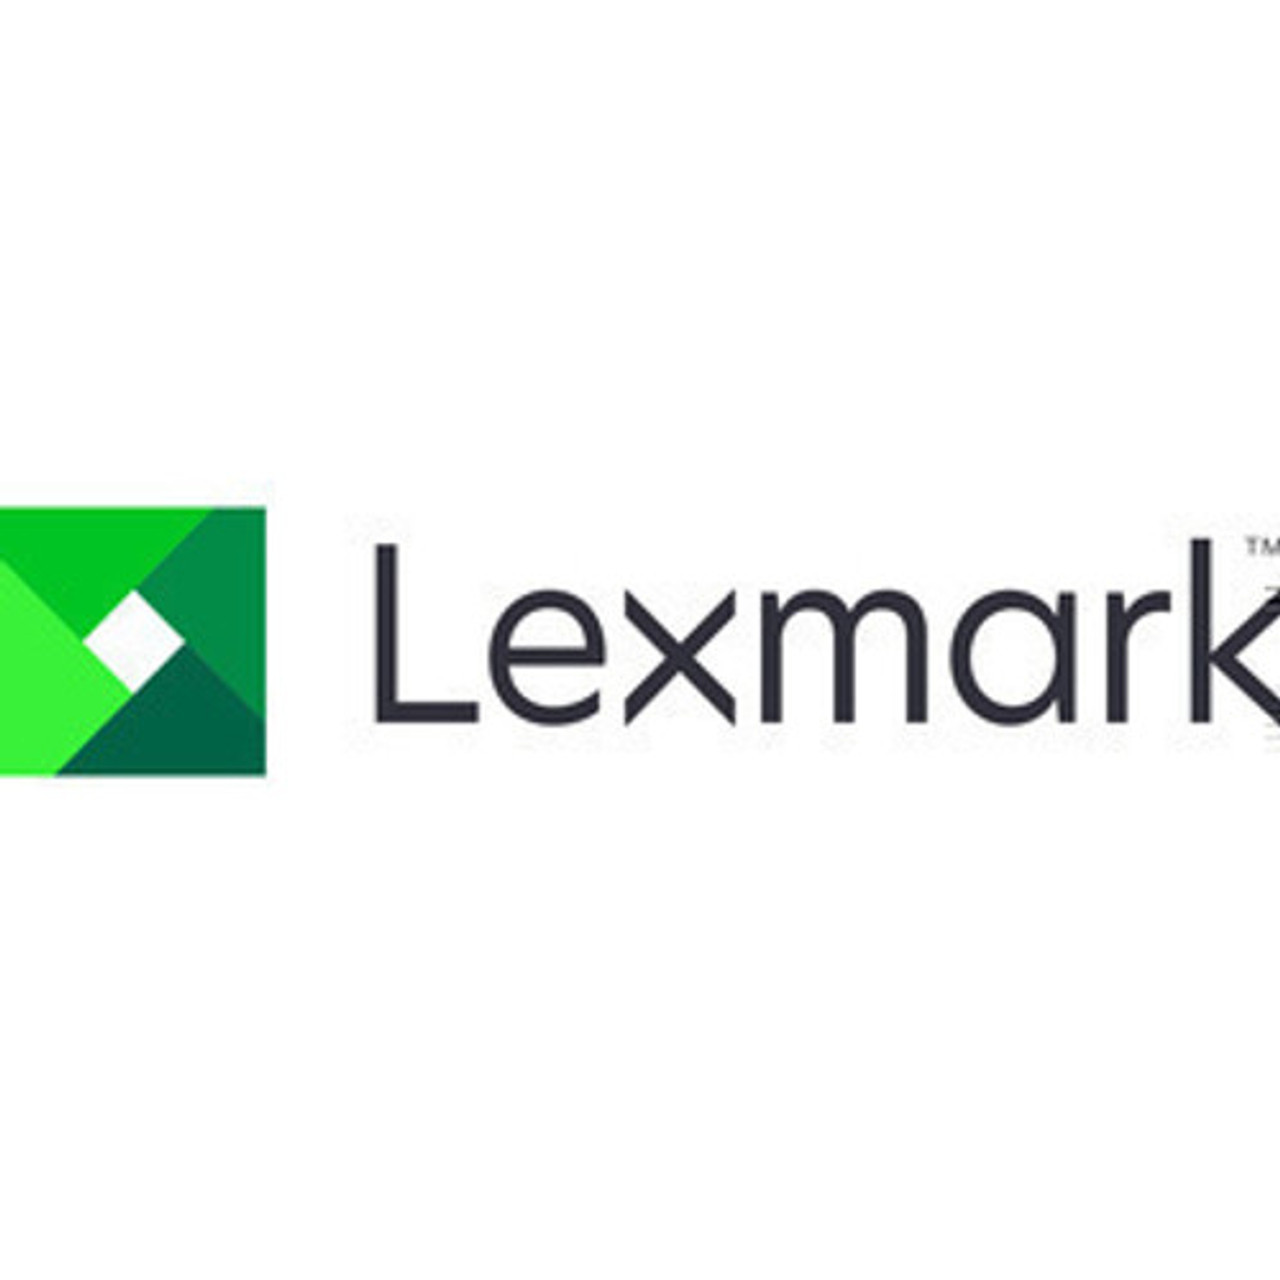 Lexmark 6YR ONSITE REPAIR CX532  SVCS - 2374541